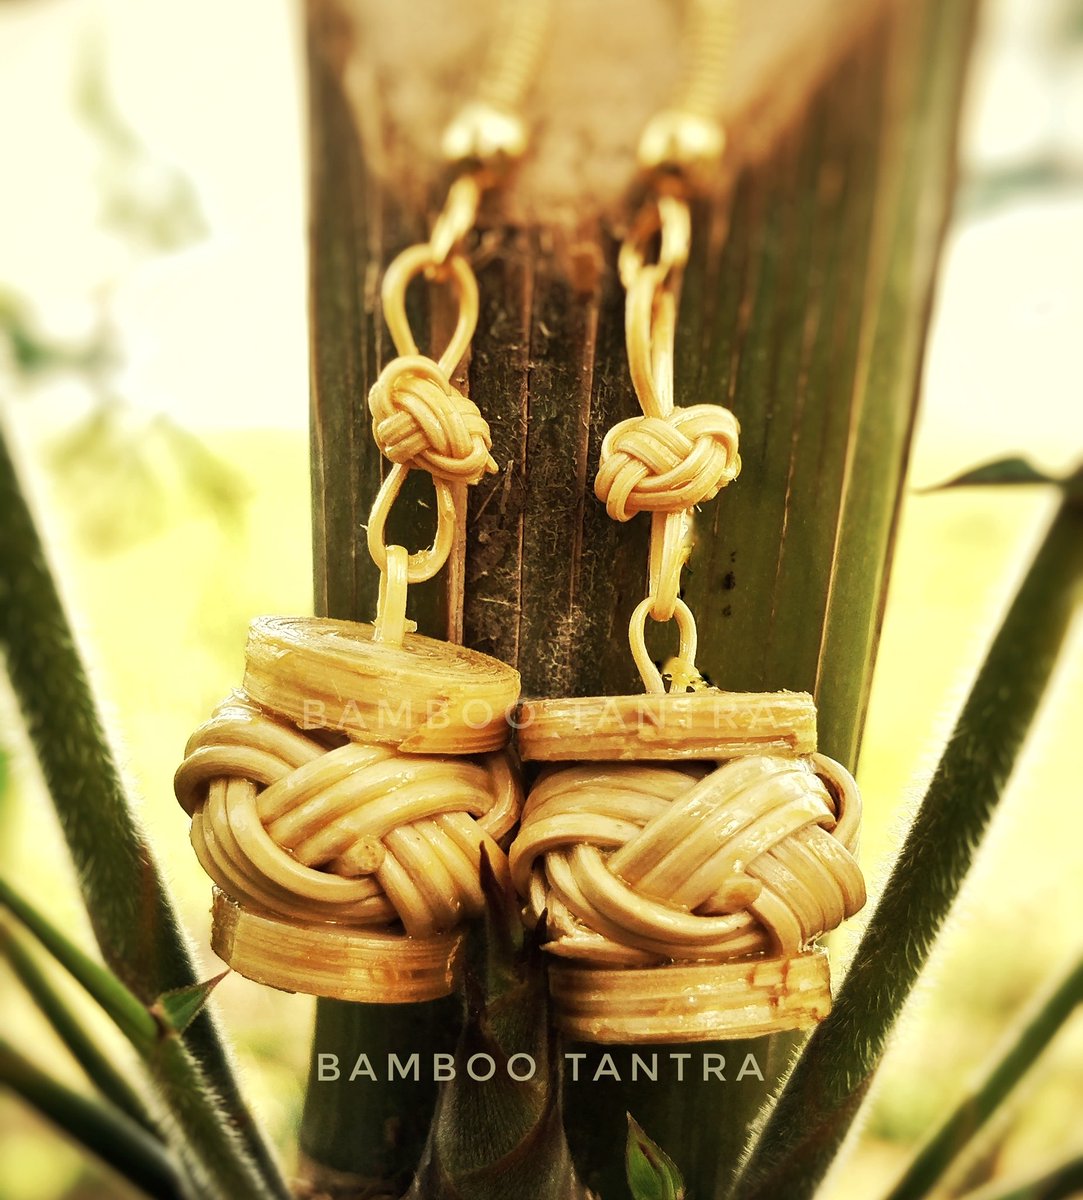 Dangling Drum shaped earrings
JE120H30

#earrings #danglingearrings #dangler #hangingearrings #bambooearrings #bamboo #handmadeIndia  #Bambooartisans #artisansofindia #Bambooart #handmadeinPune #handmadeIndia #handcrafted #bamboocraft #ecofriendlyjewellery #earringsmadeofbamboo